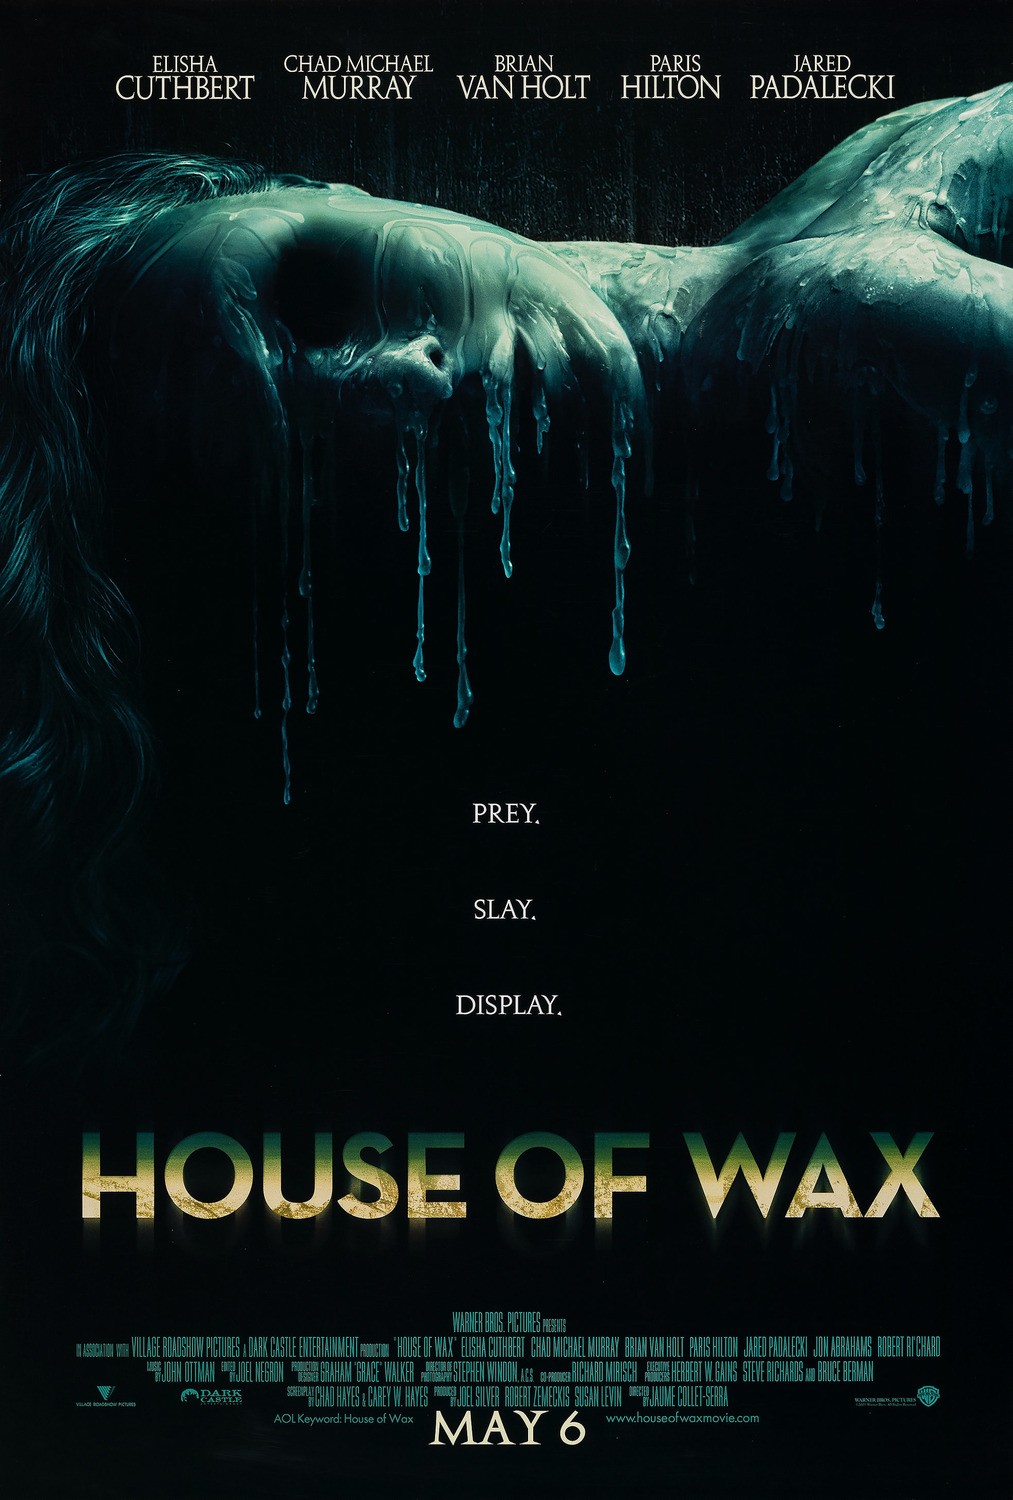 HOUSE OF WAX (2005)